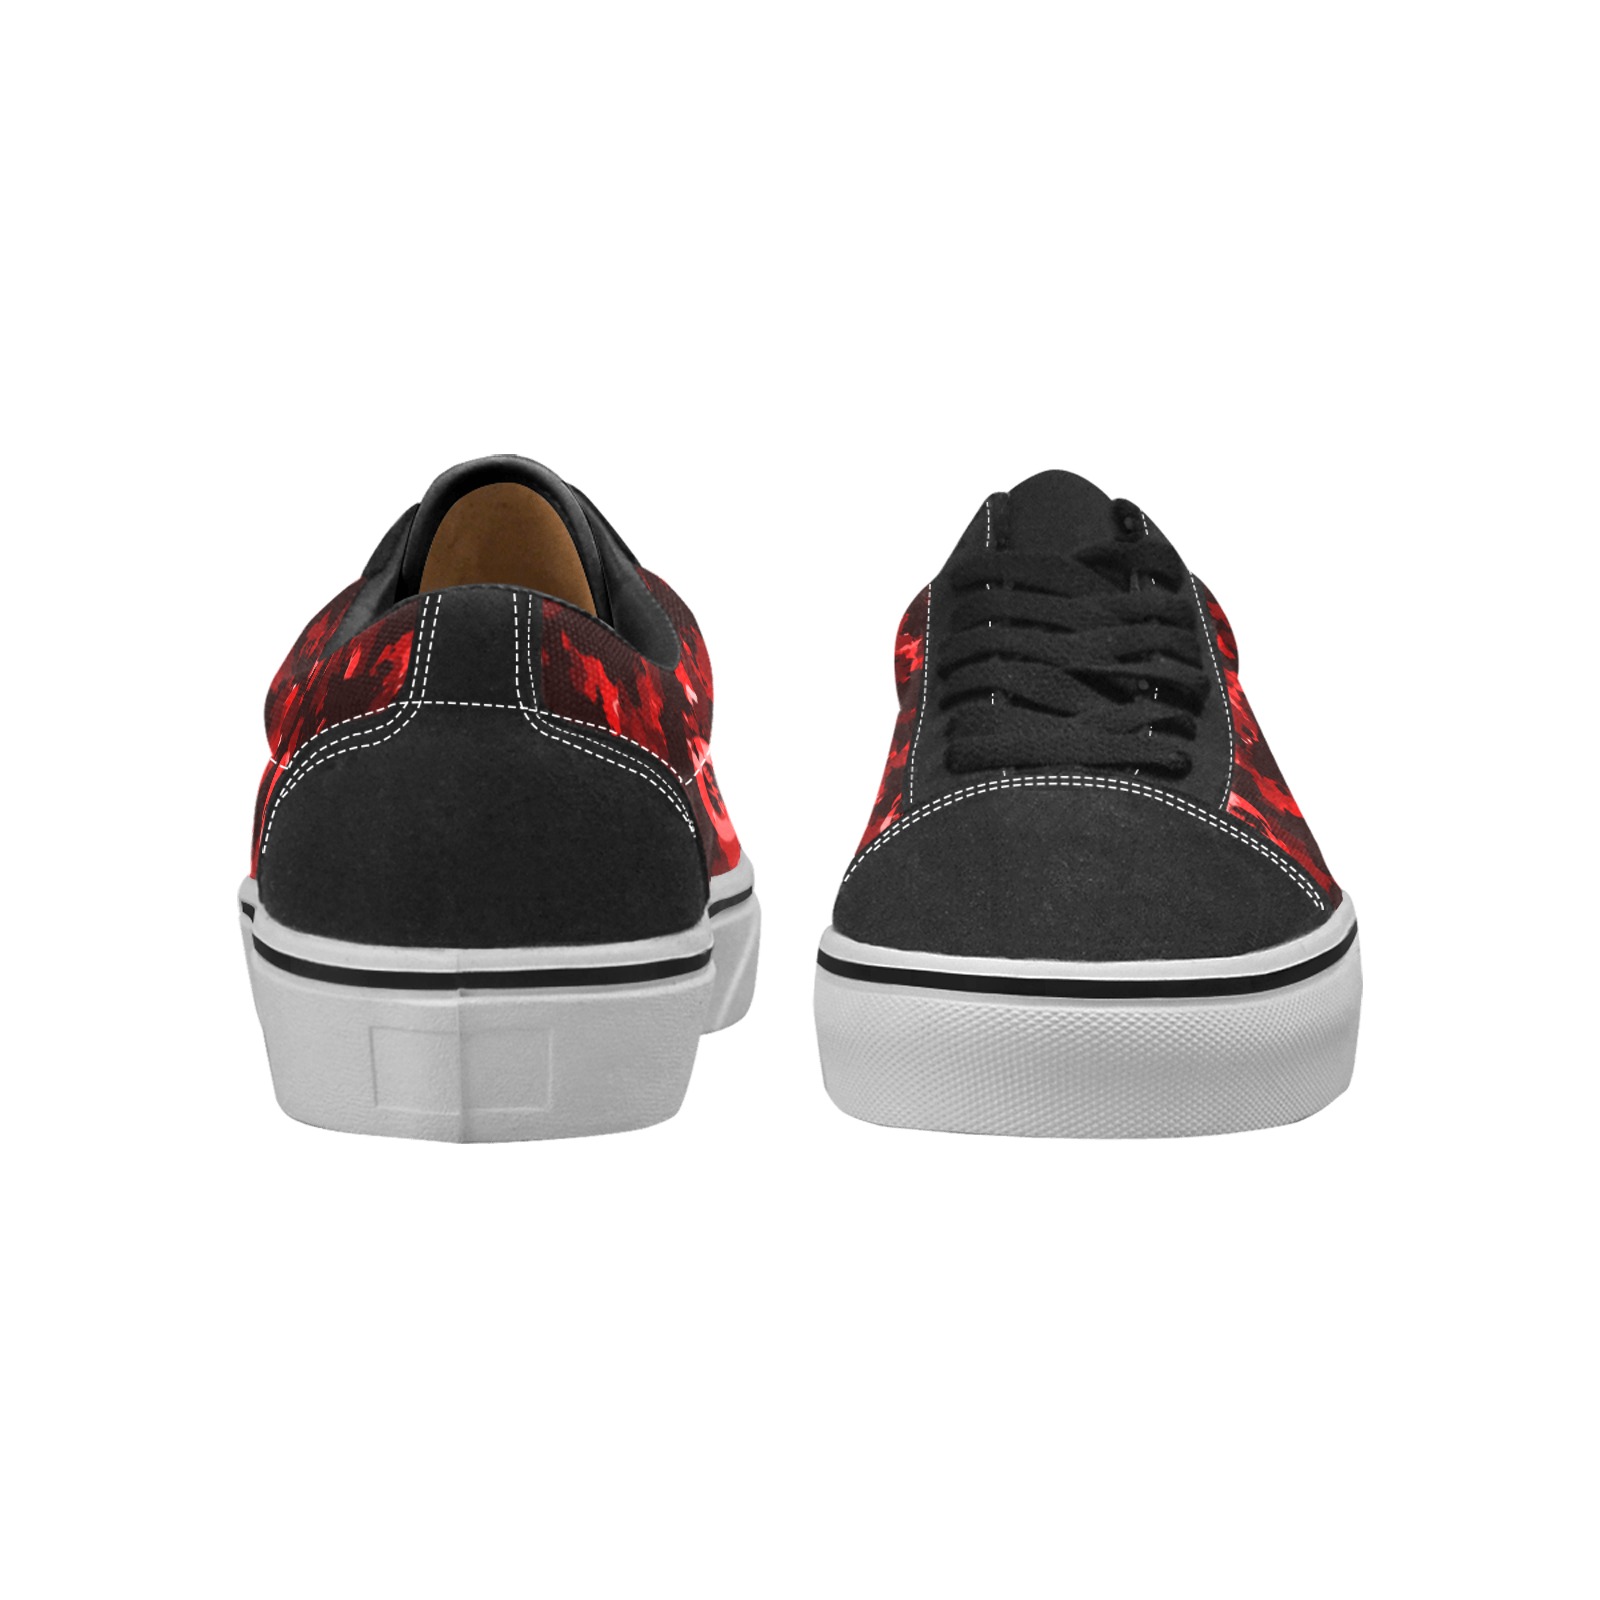 New Project (2) (2) Men's Low Top Skateboarding Shoes (Model E001-2)